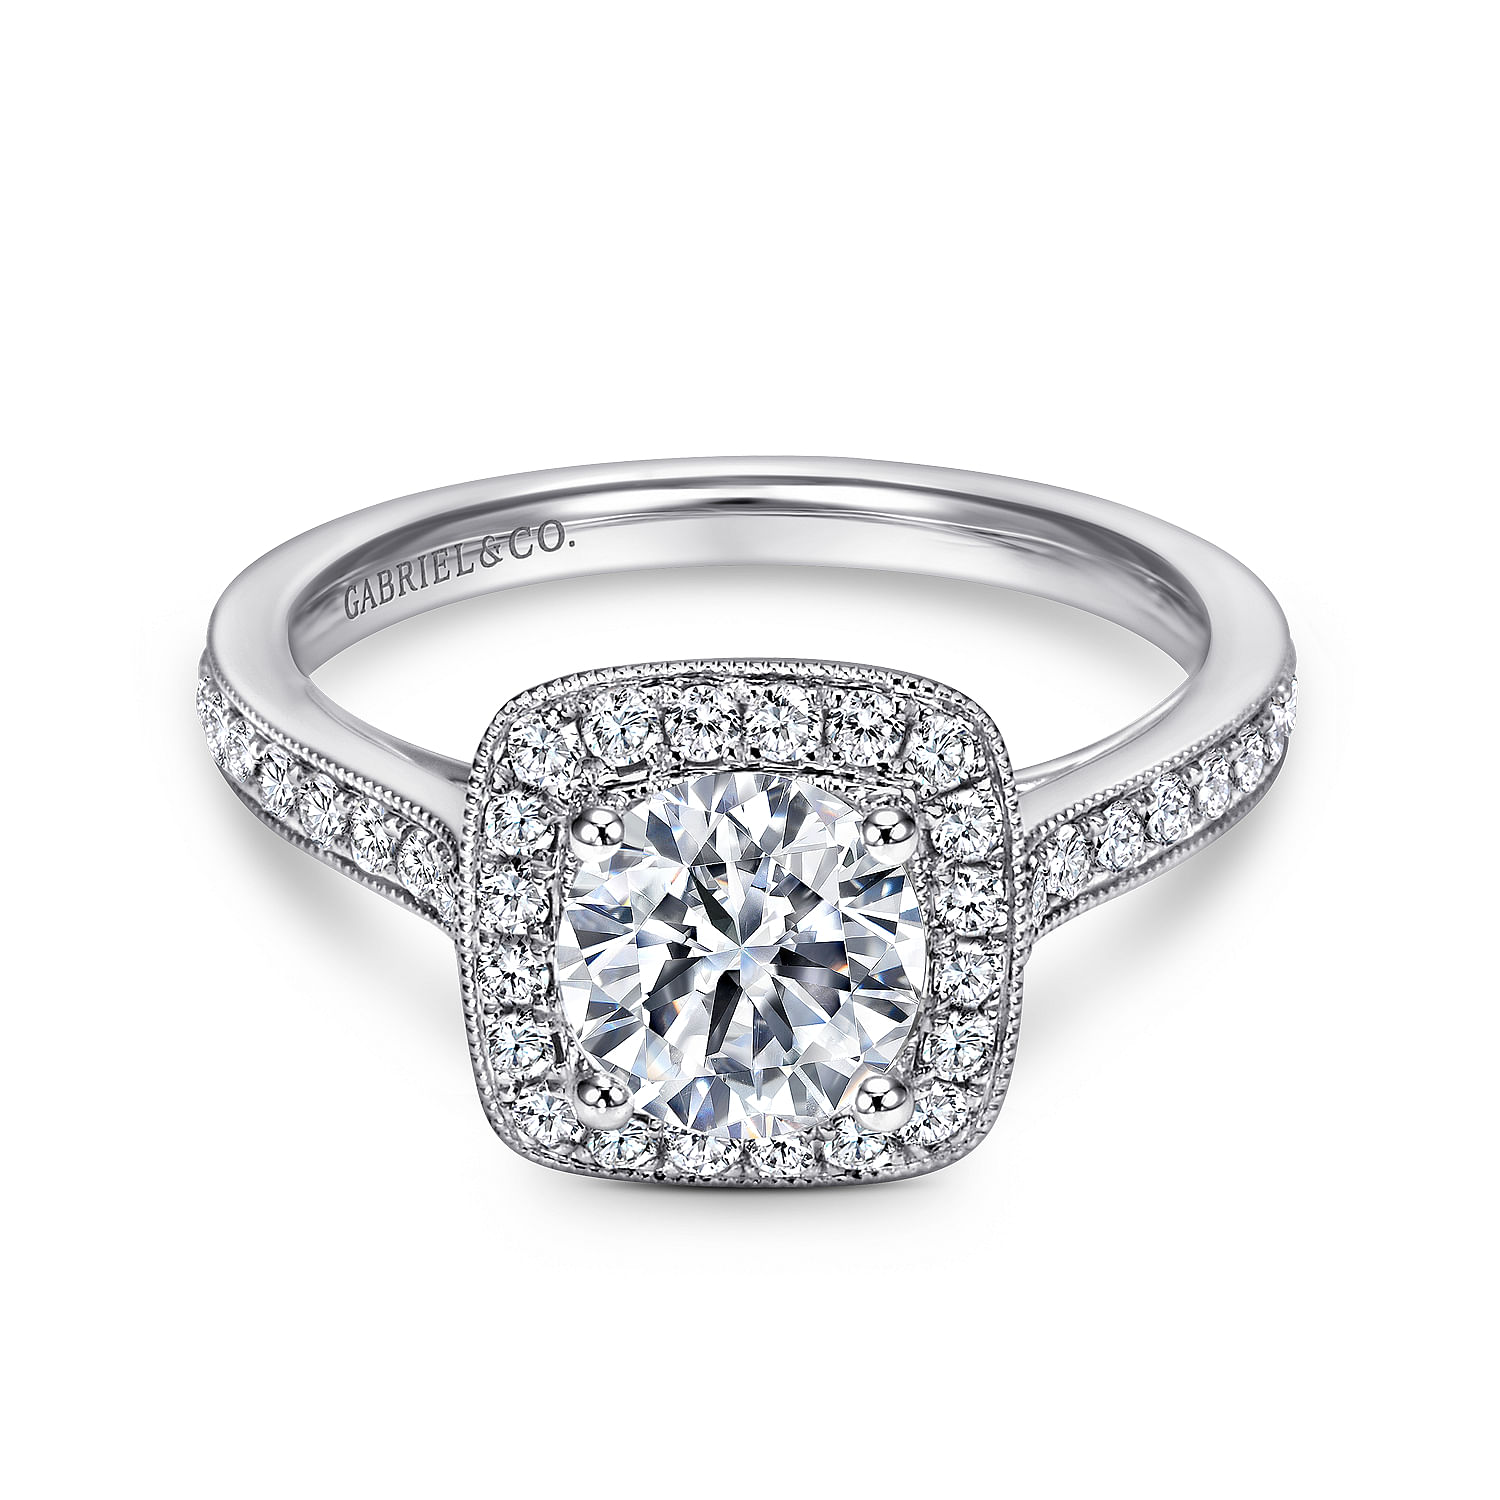 Harper - Vintage Inspired 14K White Gold Round Halo Diamond Engagement Ring